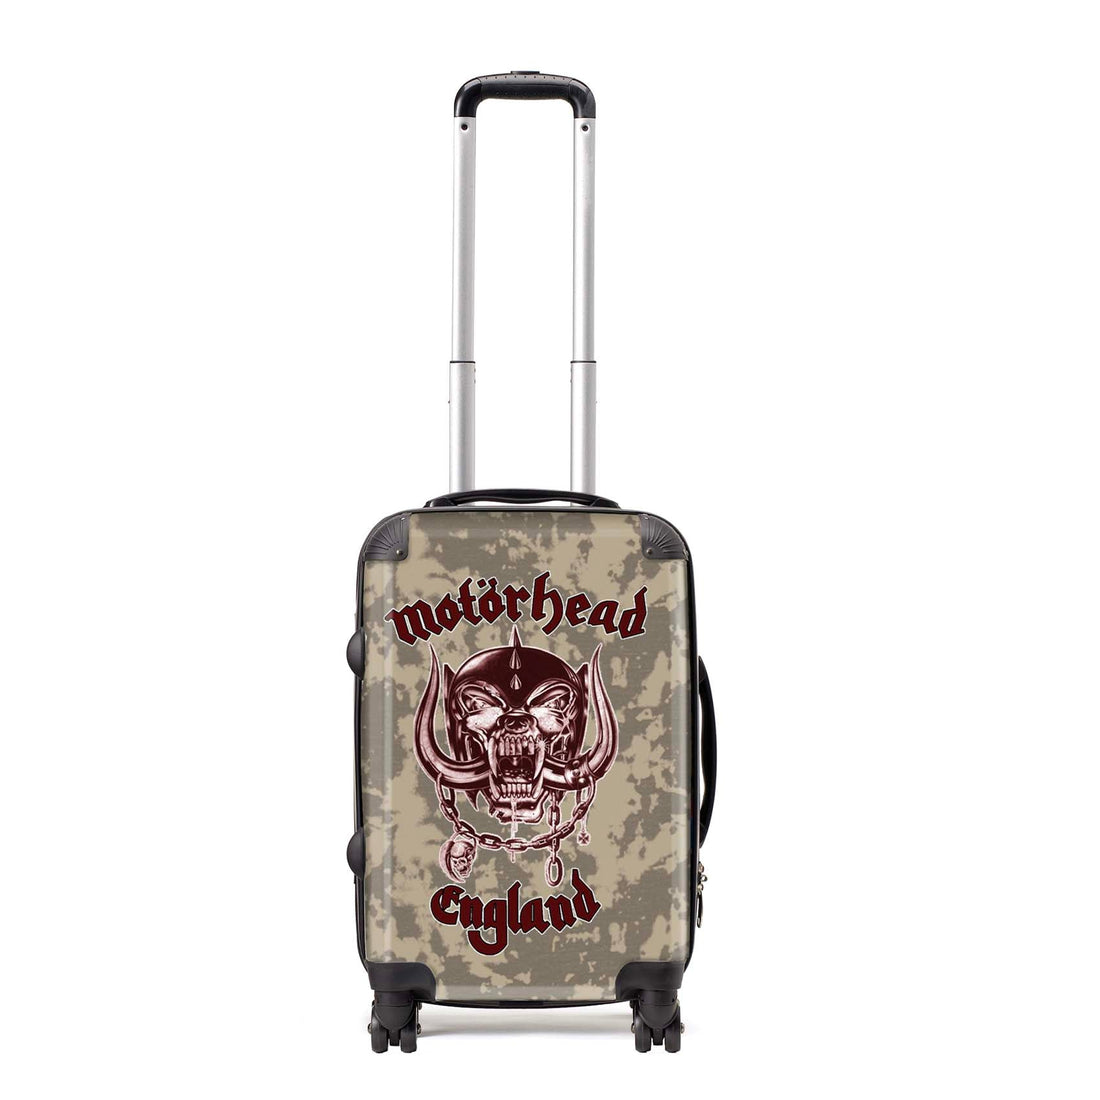 Rocksax Motorhead  Travel Bag Luggage - England White